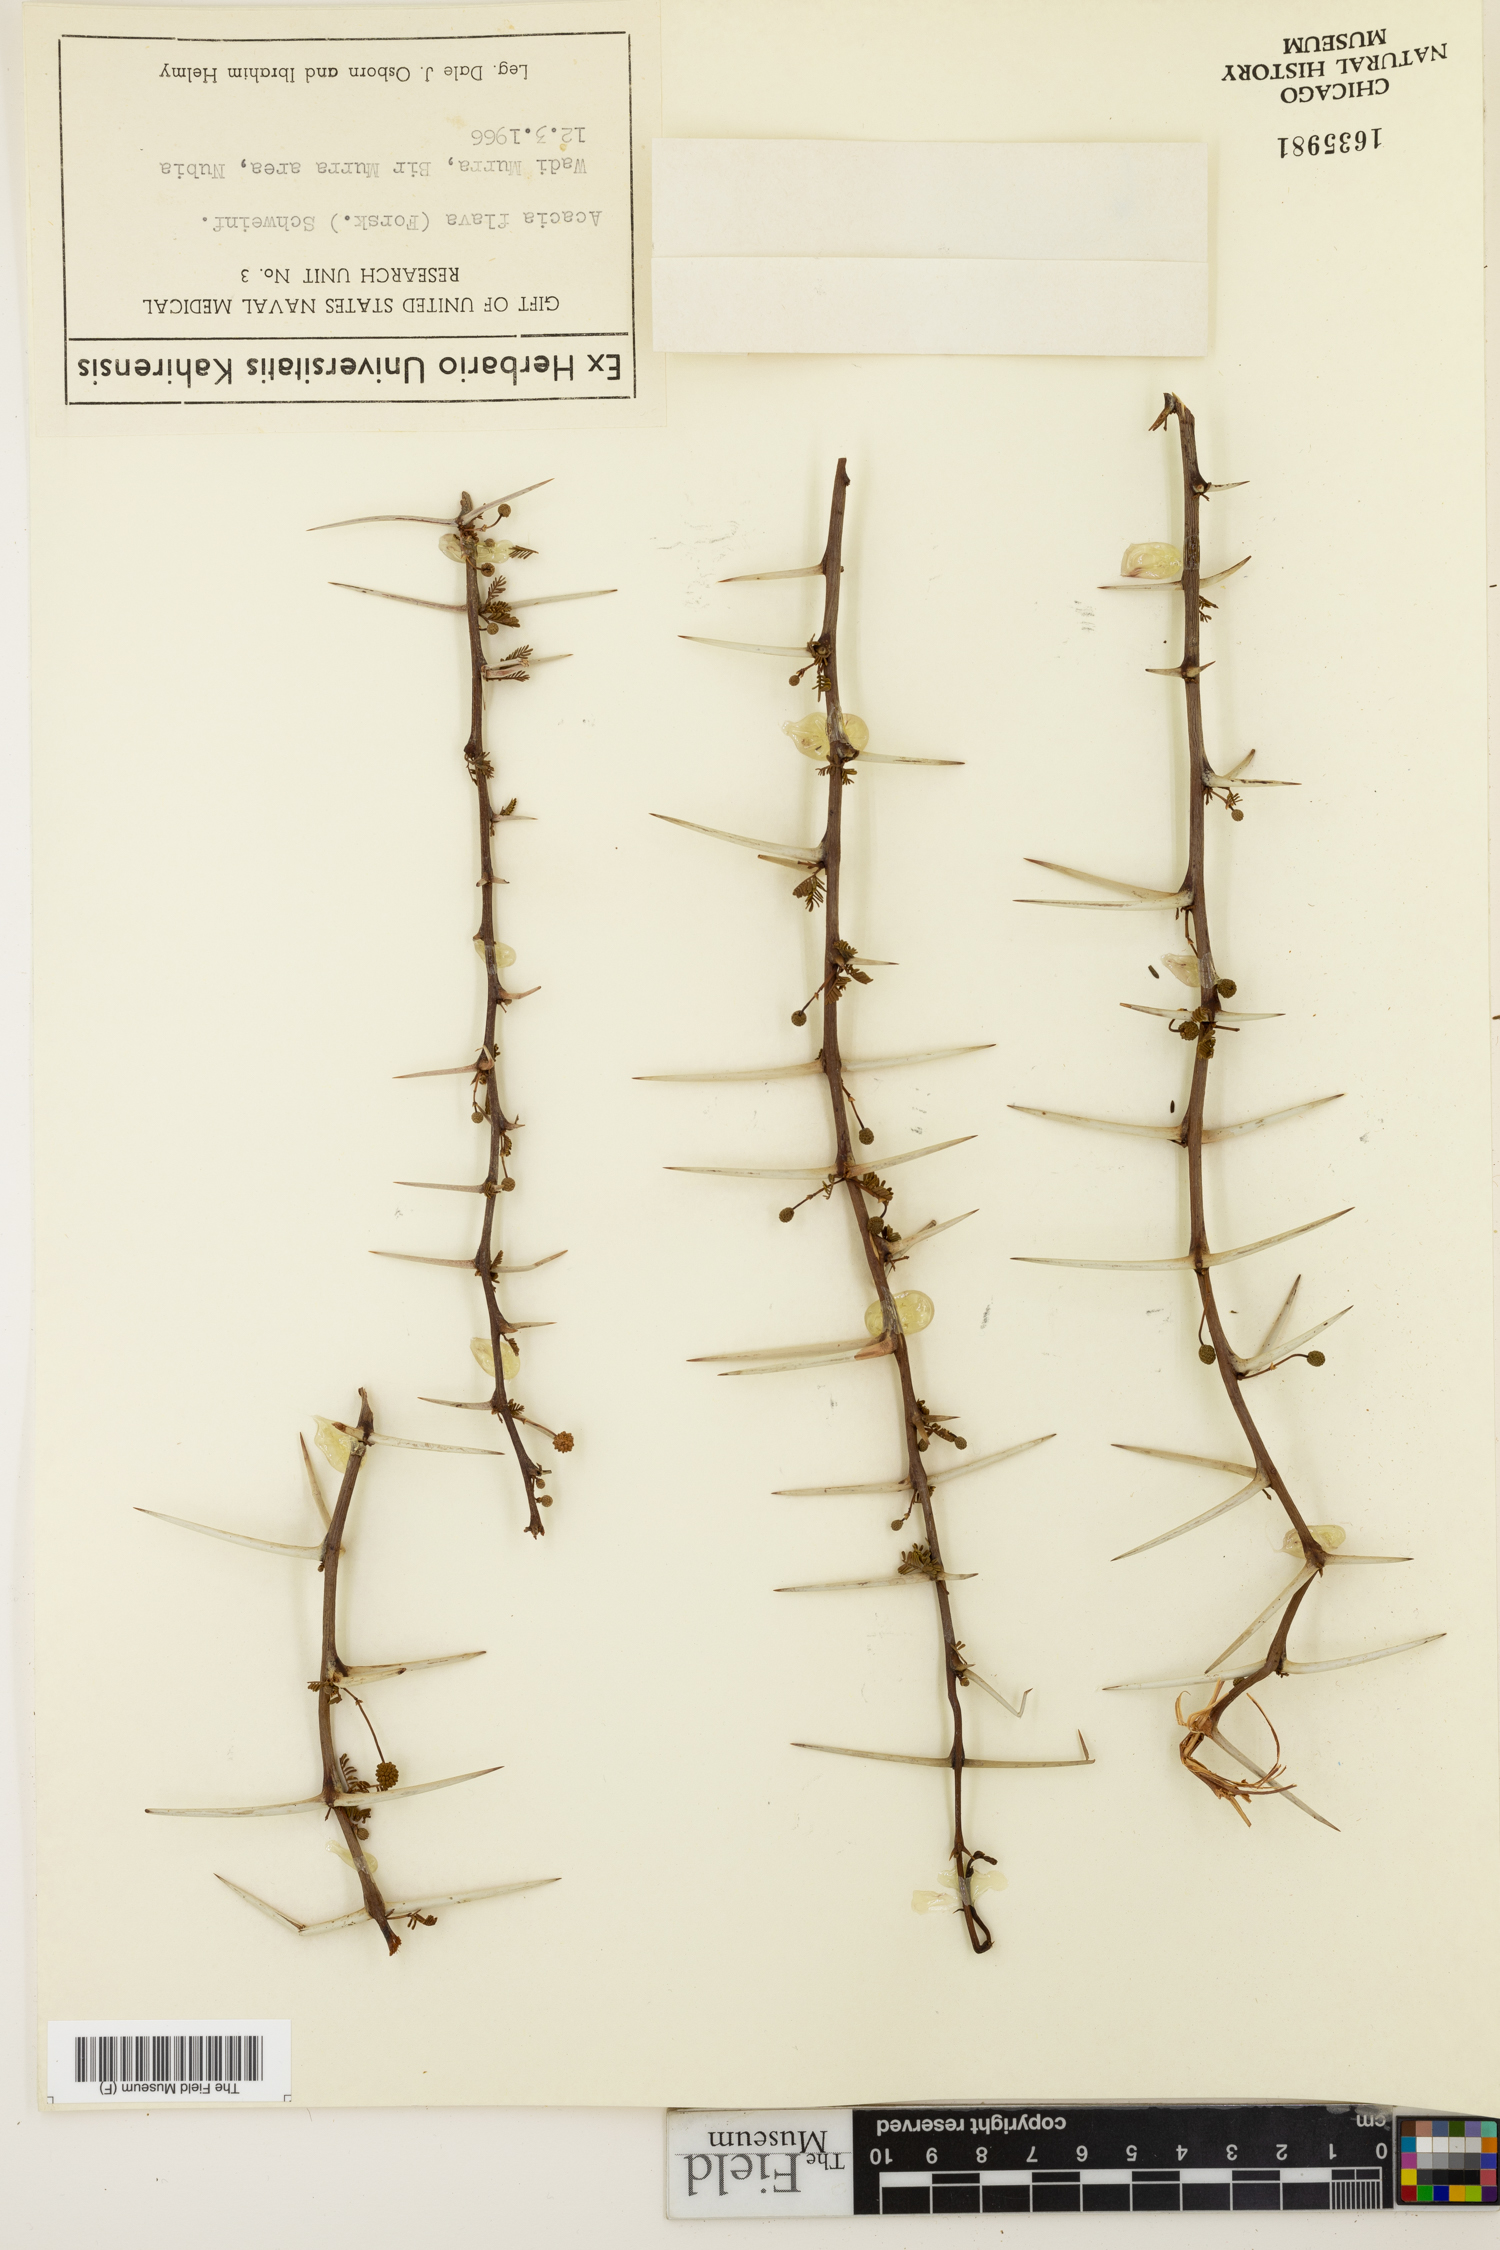 Acacia ehrenbergiana image